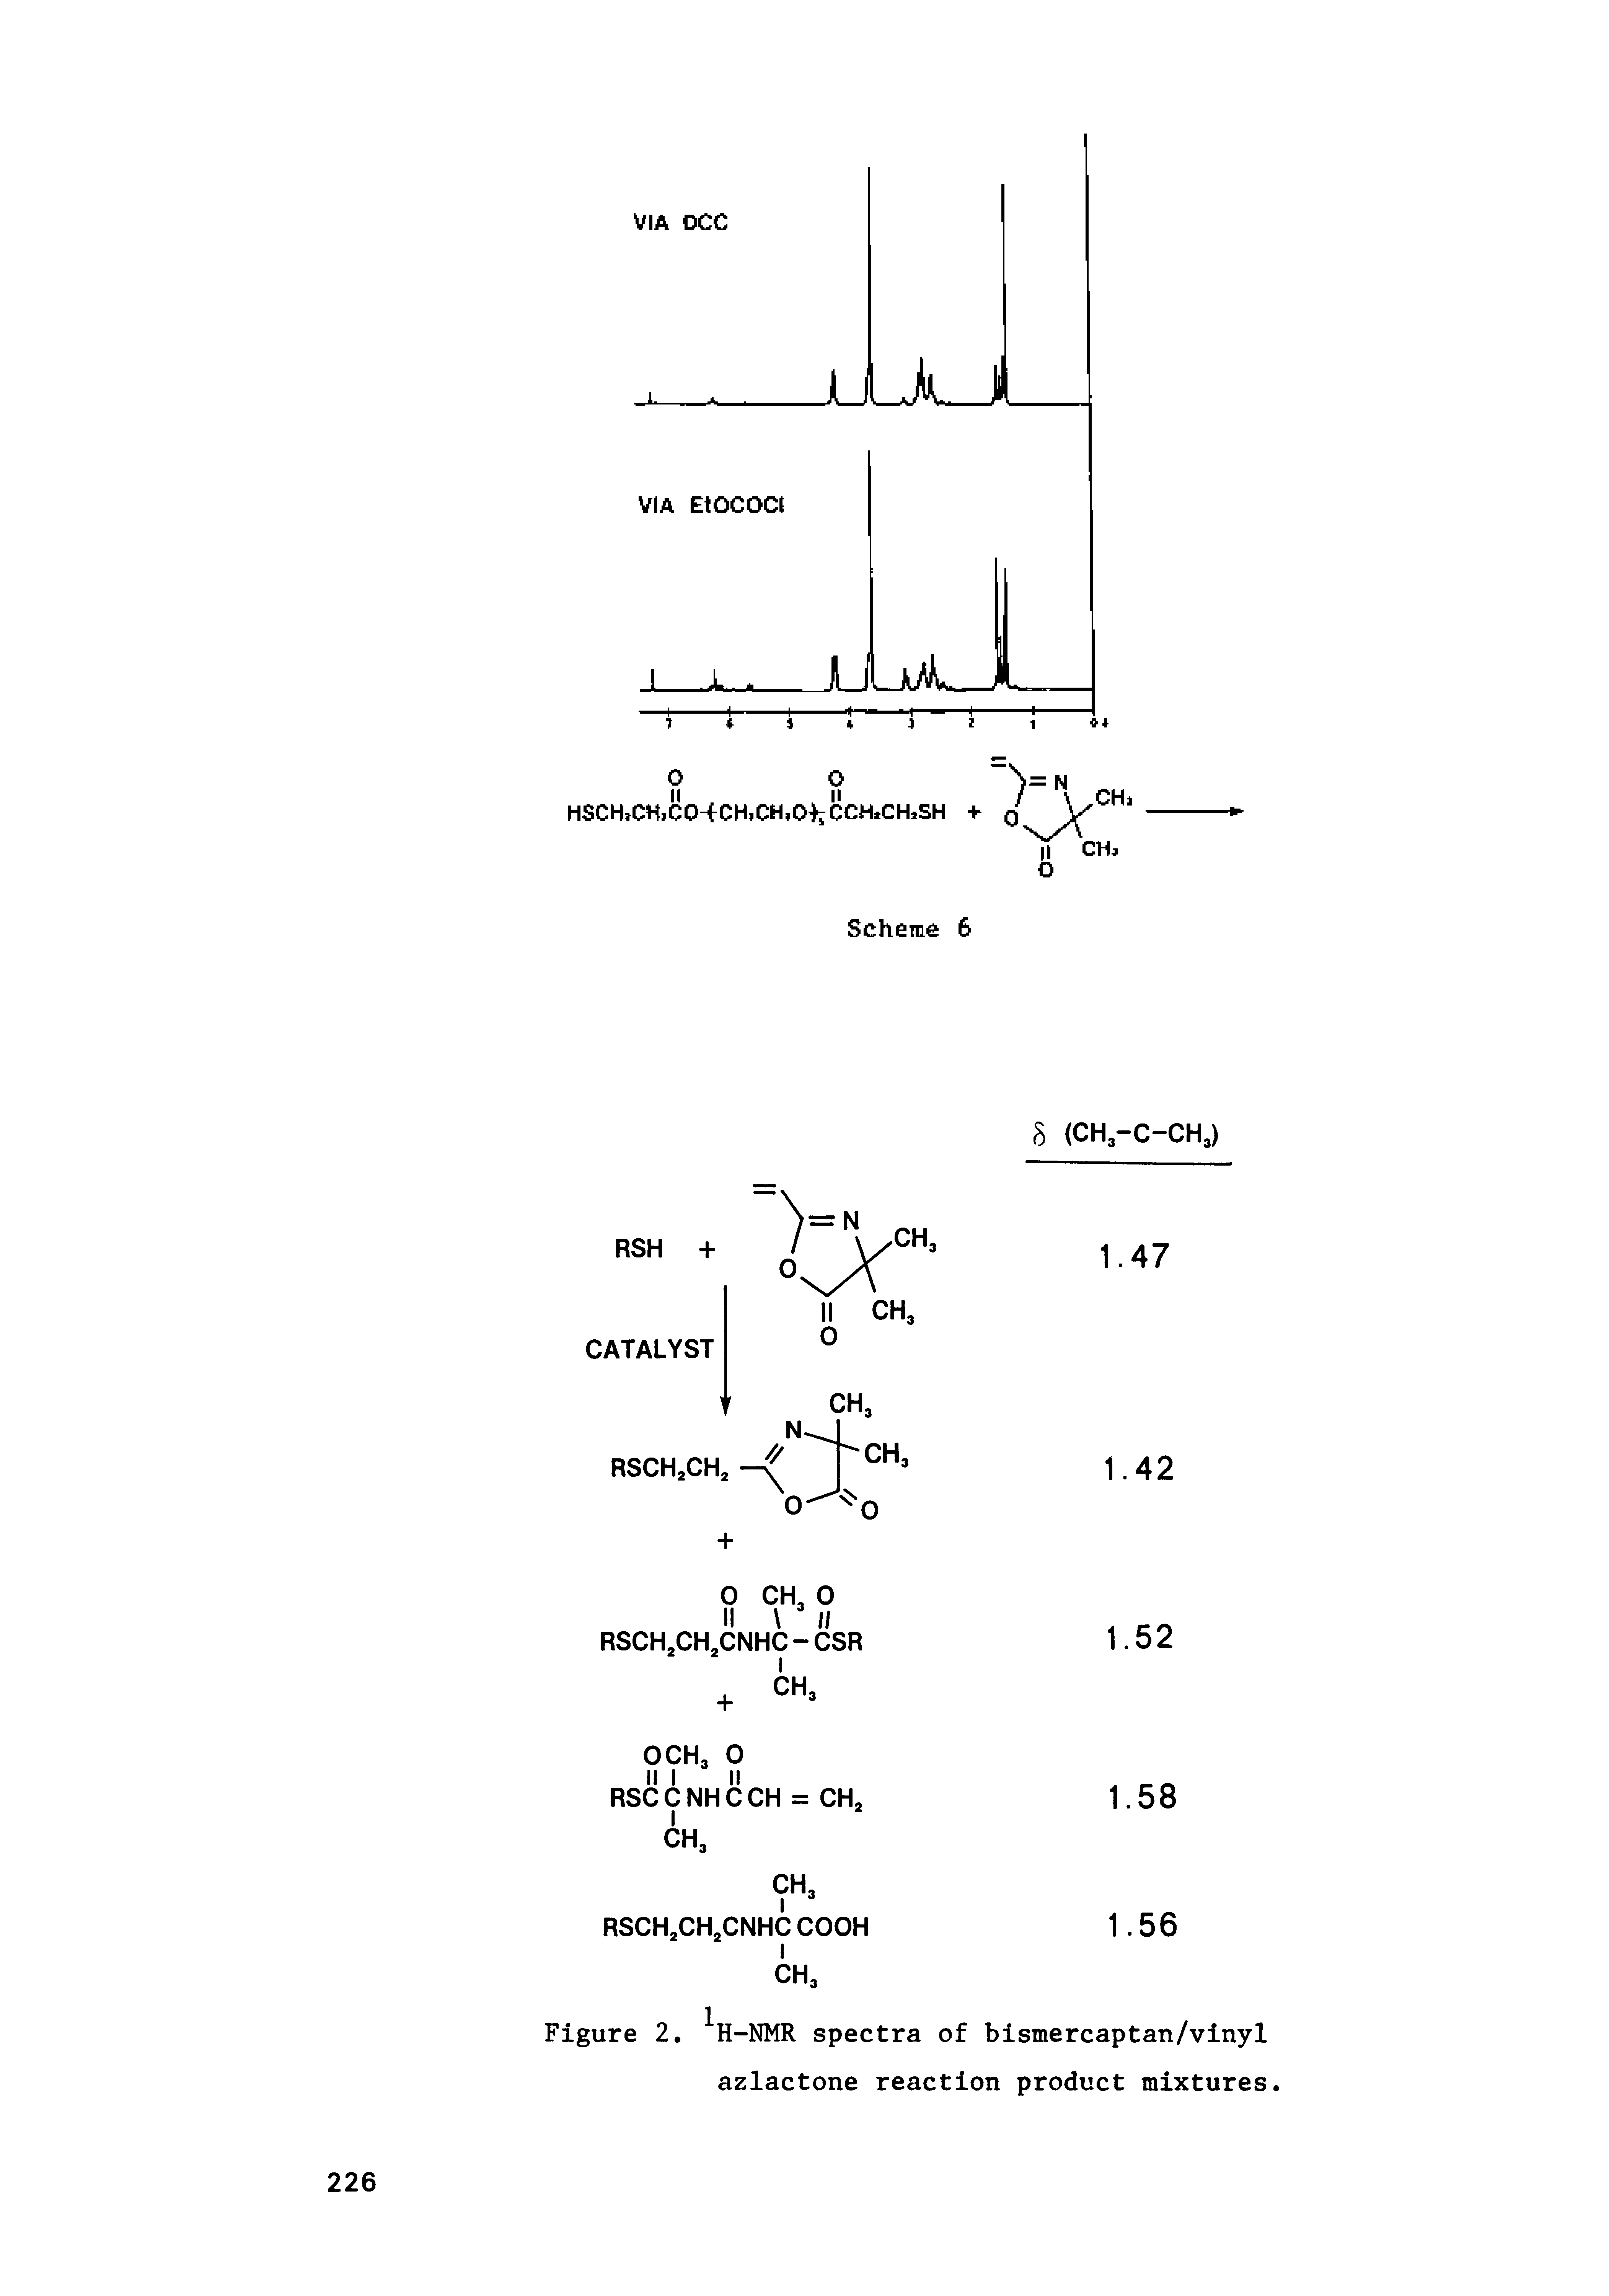 Figure 2. H-NMR spectra of bismercaptan/vinyl azlactone reaction product mixtures.